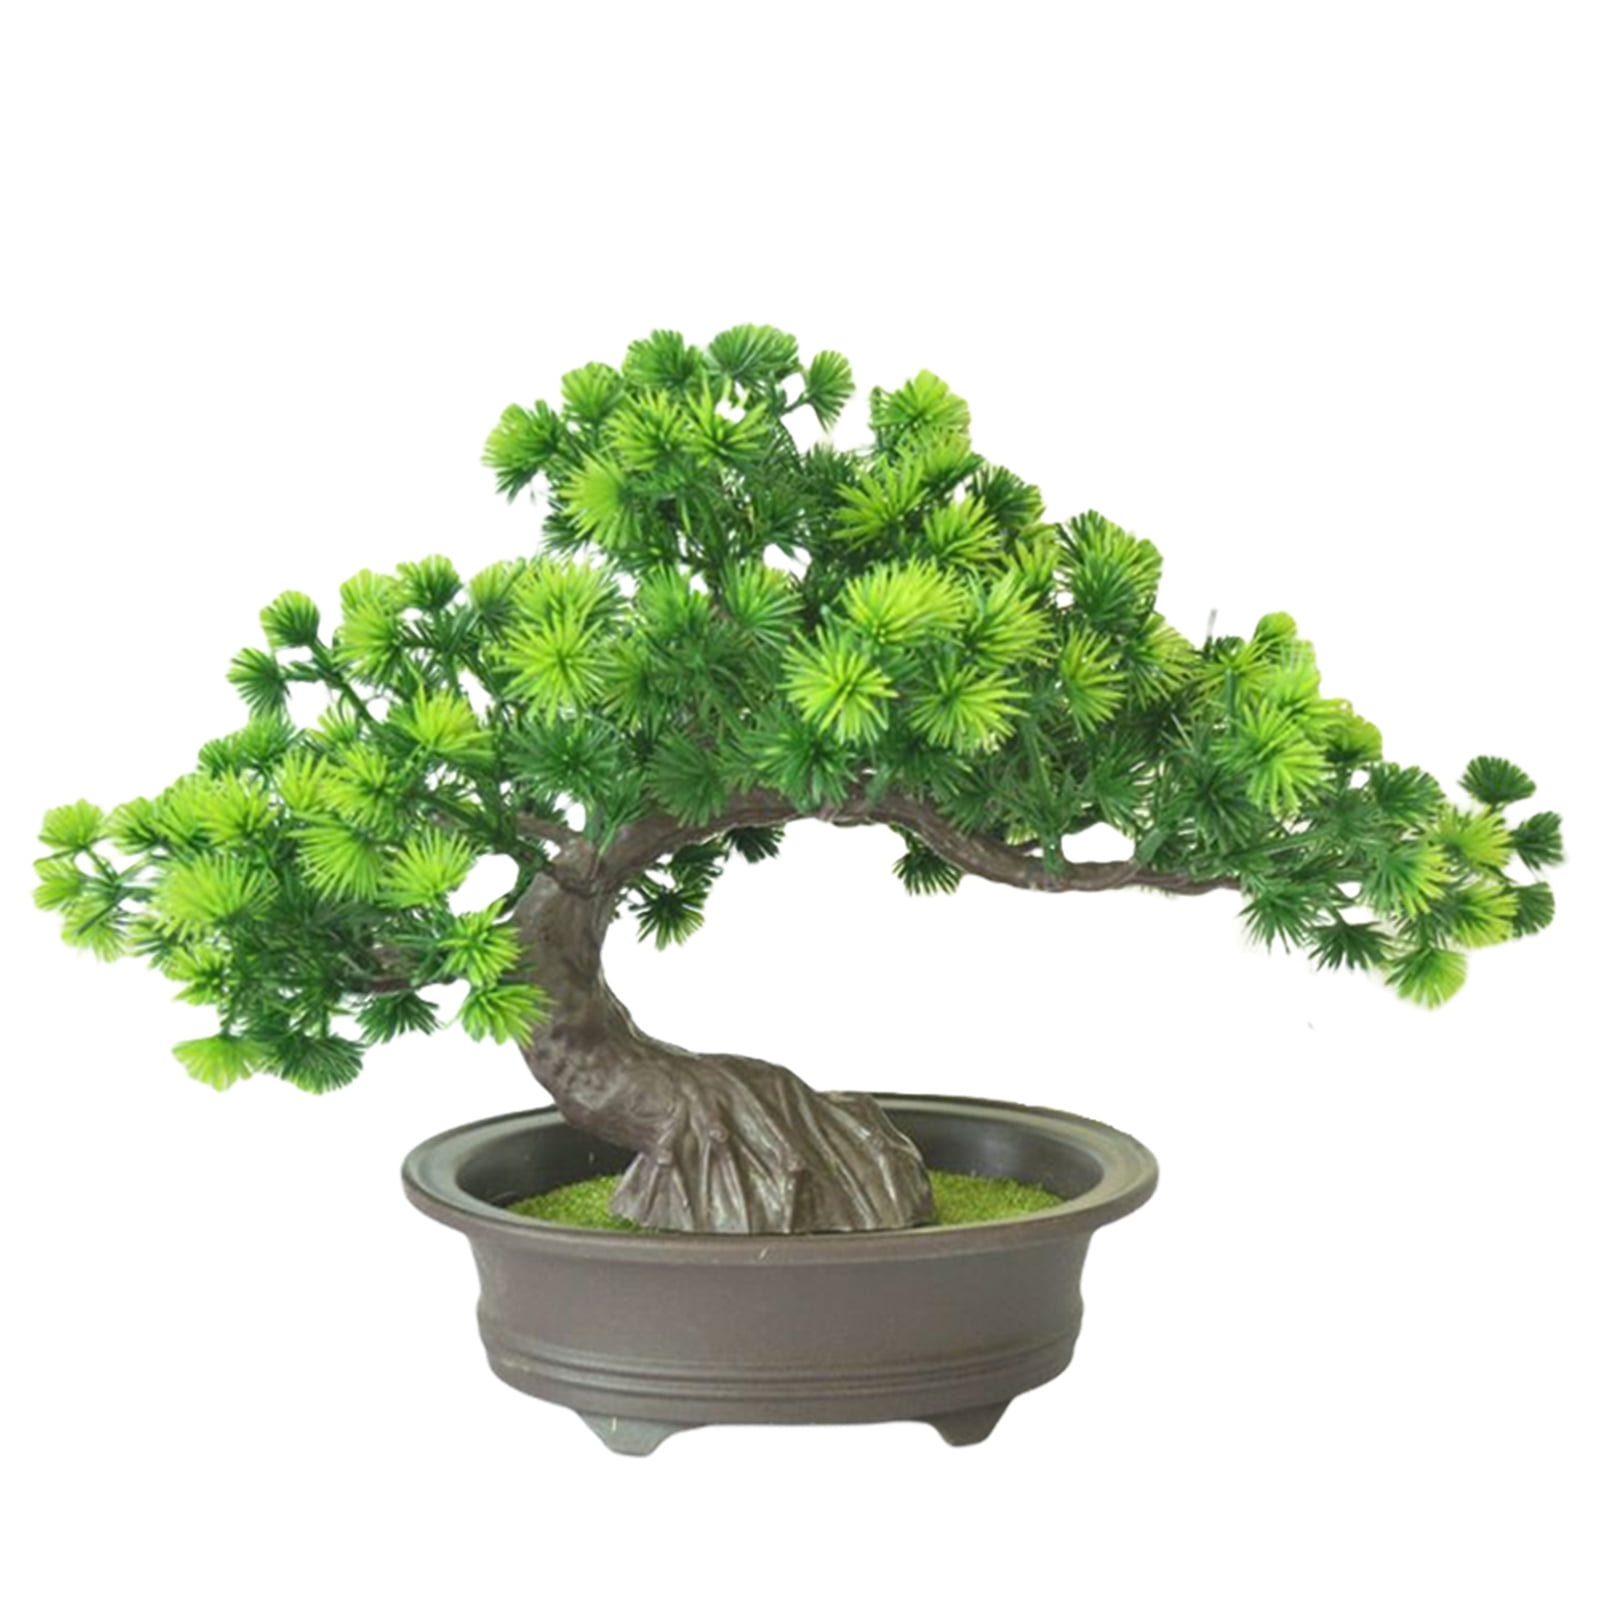 Artificial Fake Plants Pine Tree Bonsai Home Garden Desk Ornament Decor Gift 